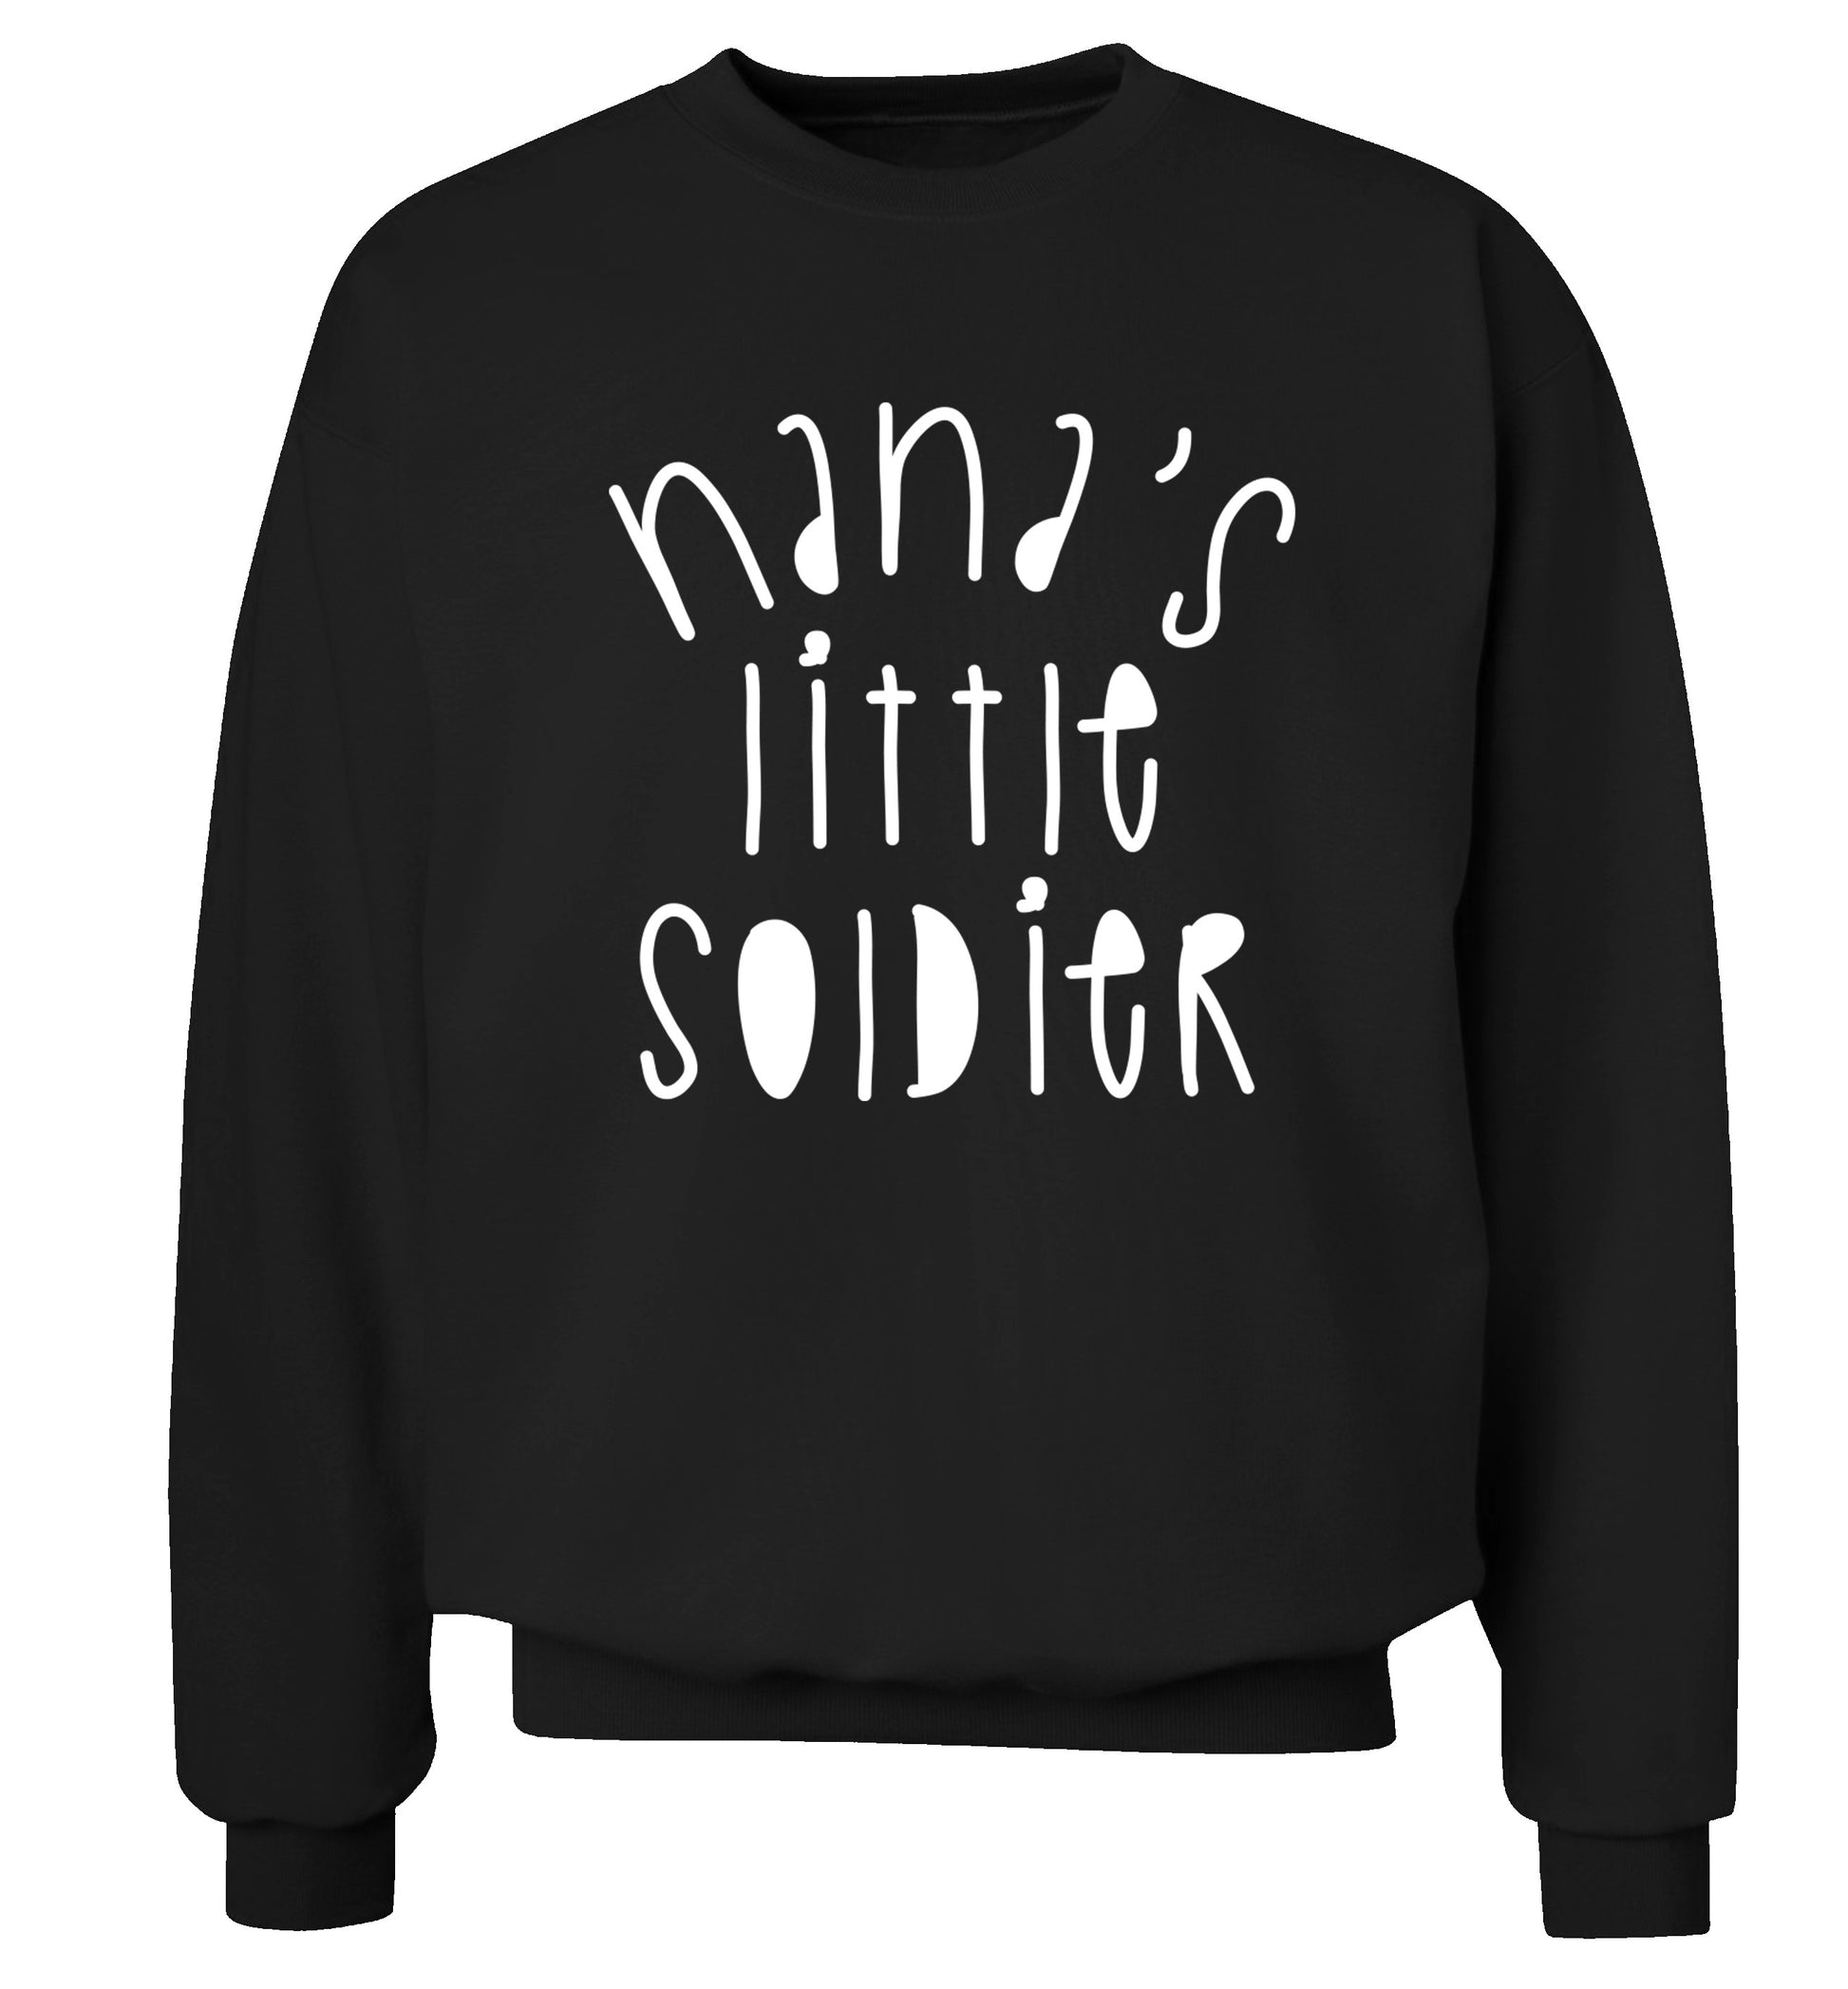 Nana's little soldier Adult's unisex black Sweater 2XL